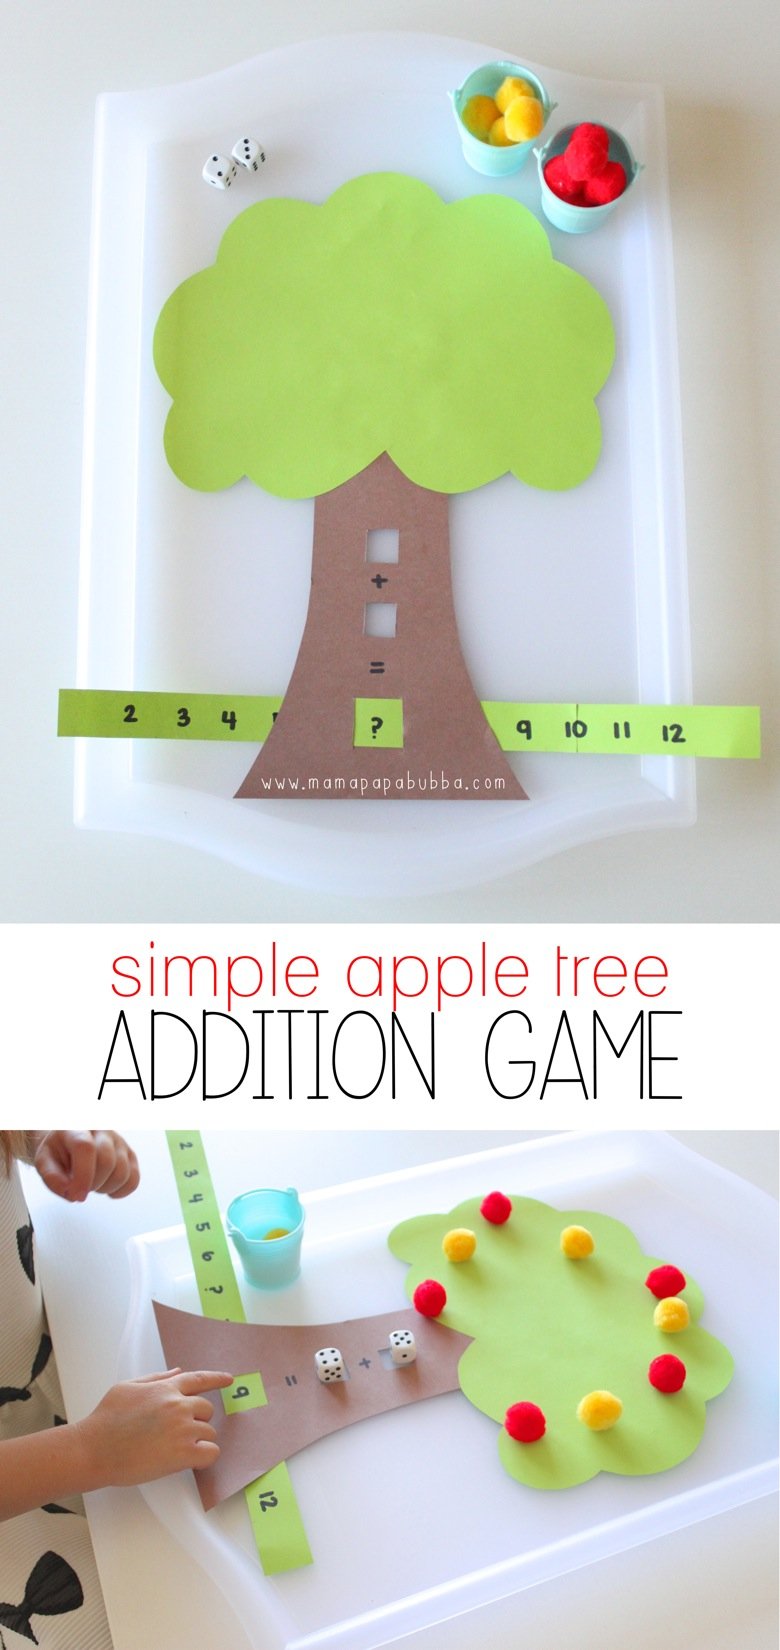 Simple Apple Tree Addition Game